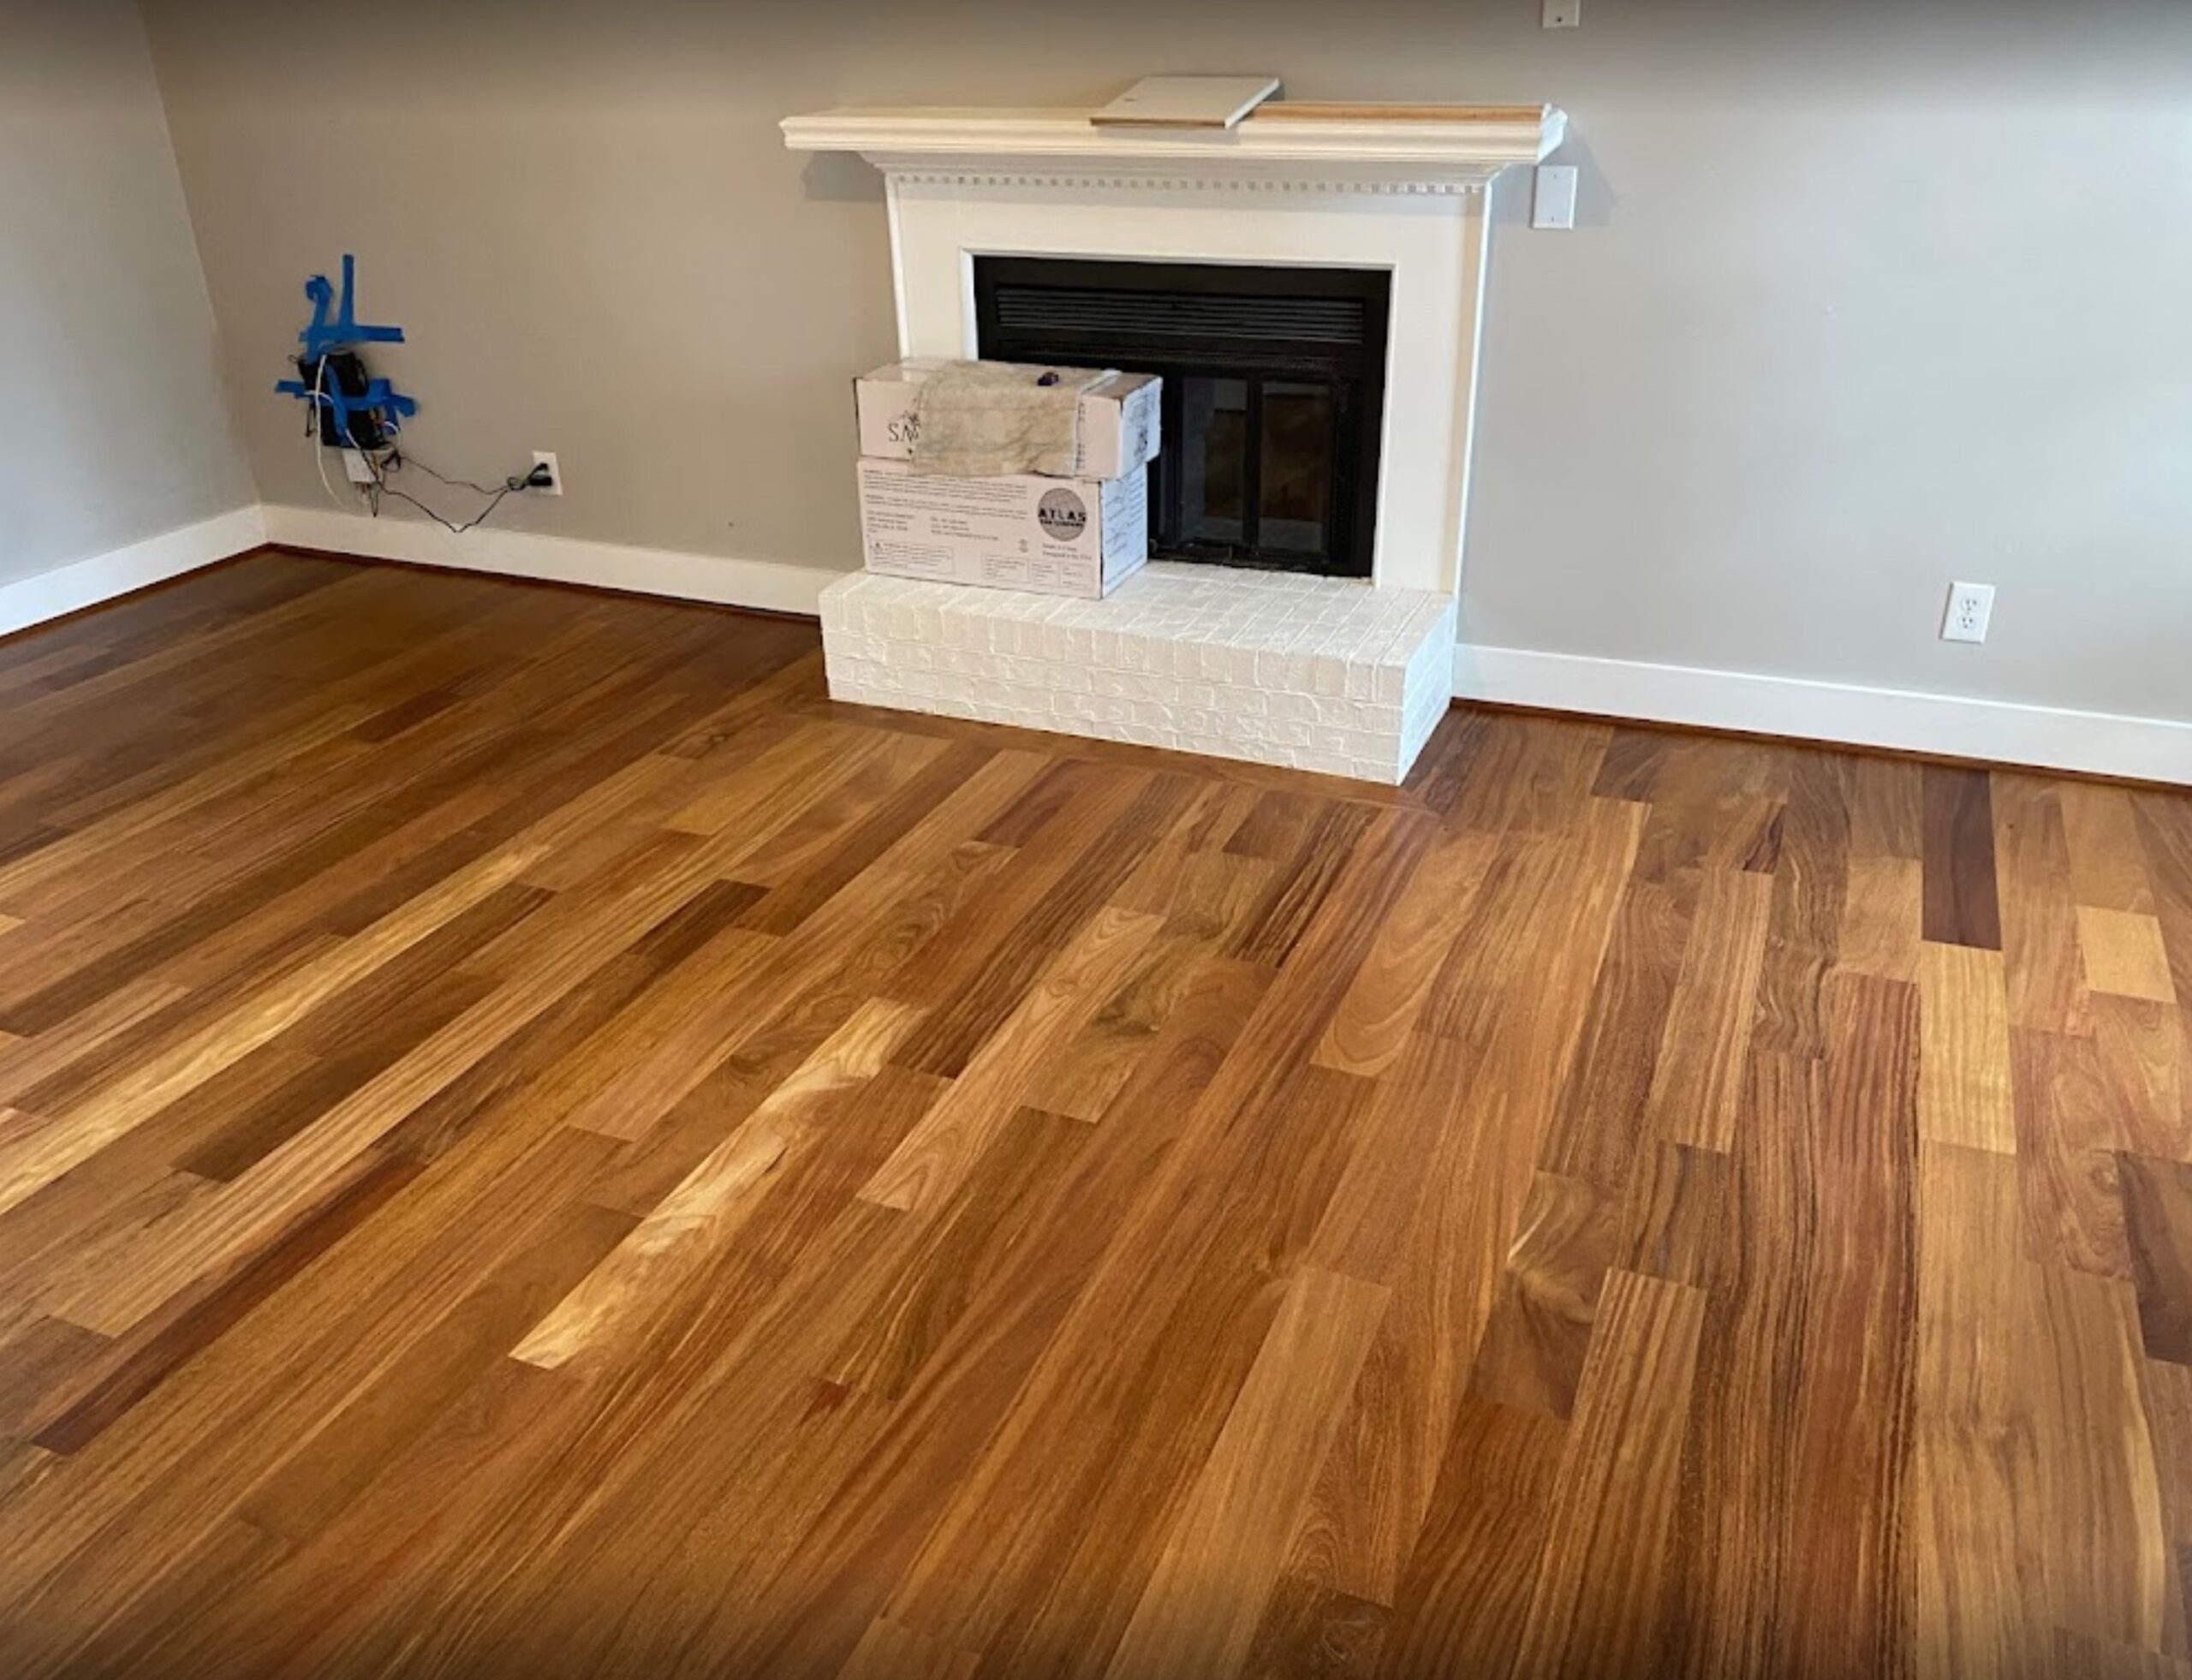 new hardwood floors installed